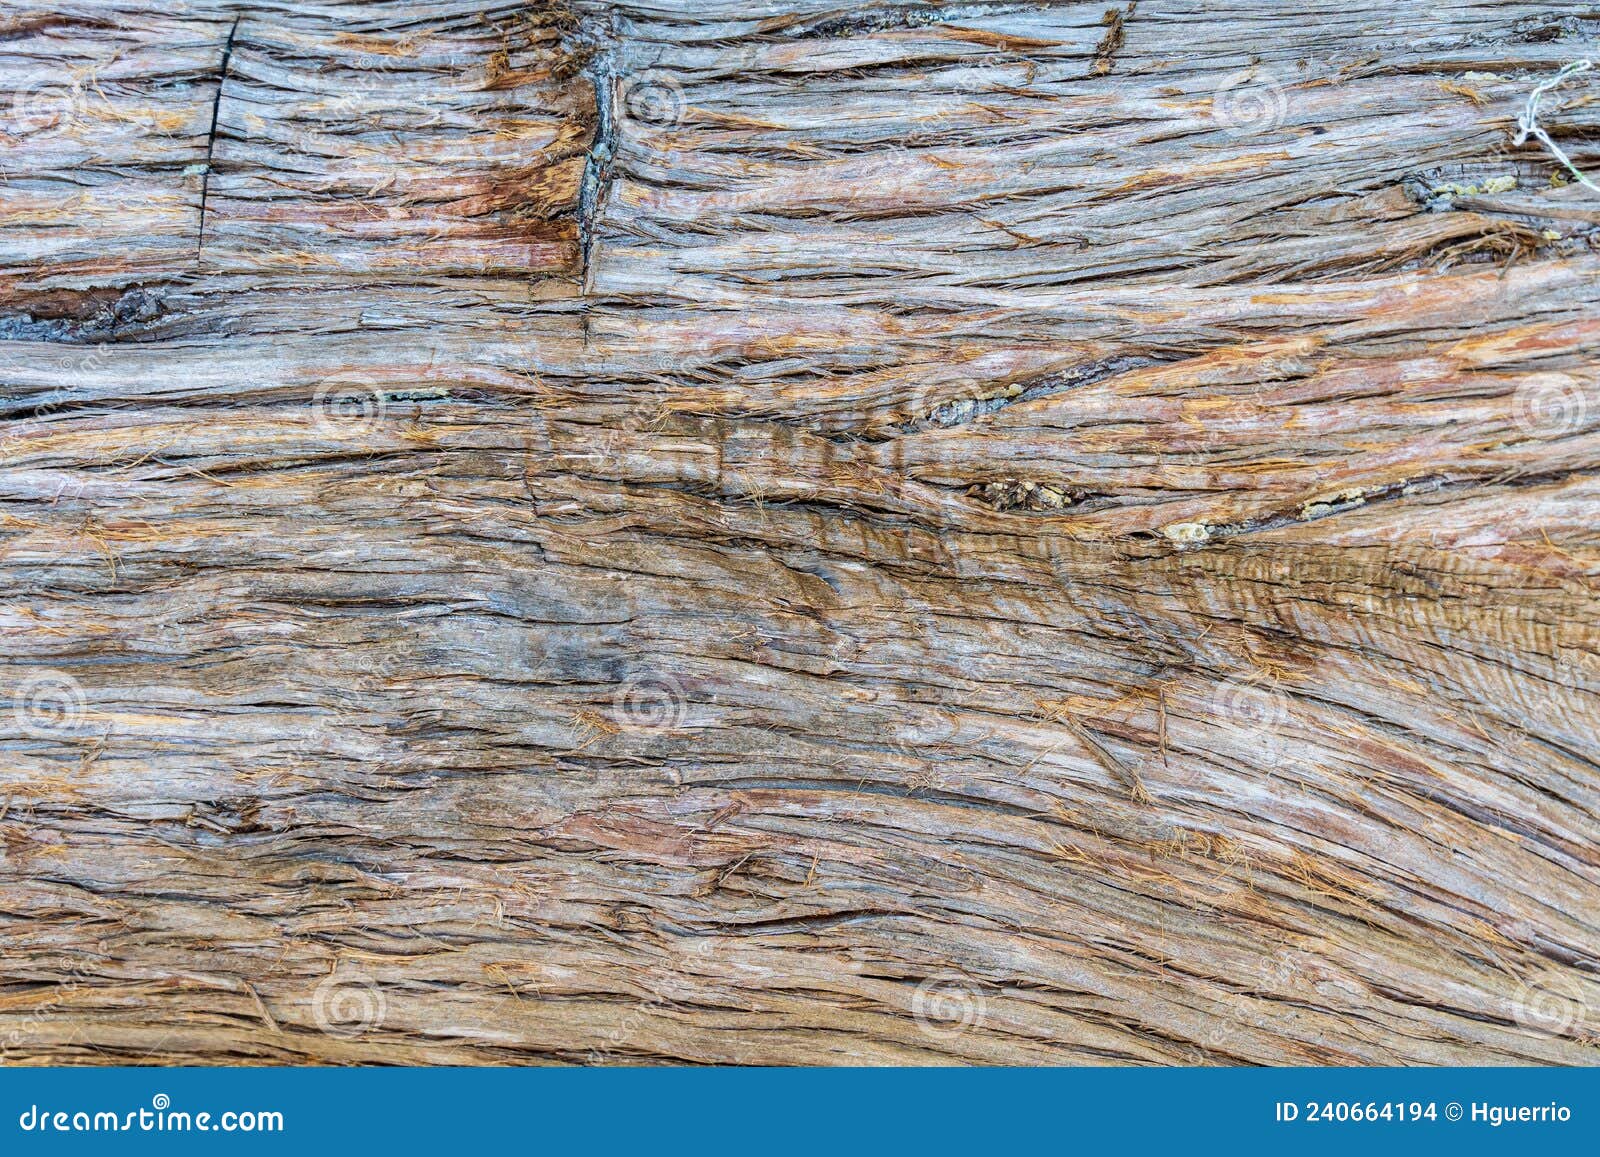 bark of an eastern red cedar tree a.k.a. virginian juniper juniperus virginiana - fort island gulf beach, crystal river, florida